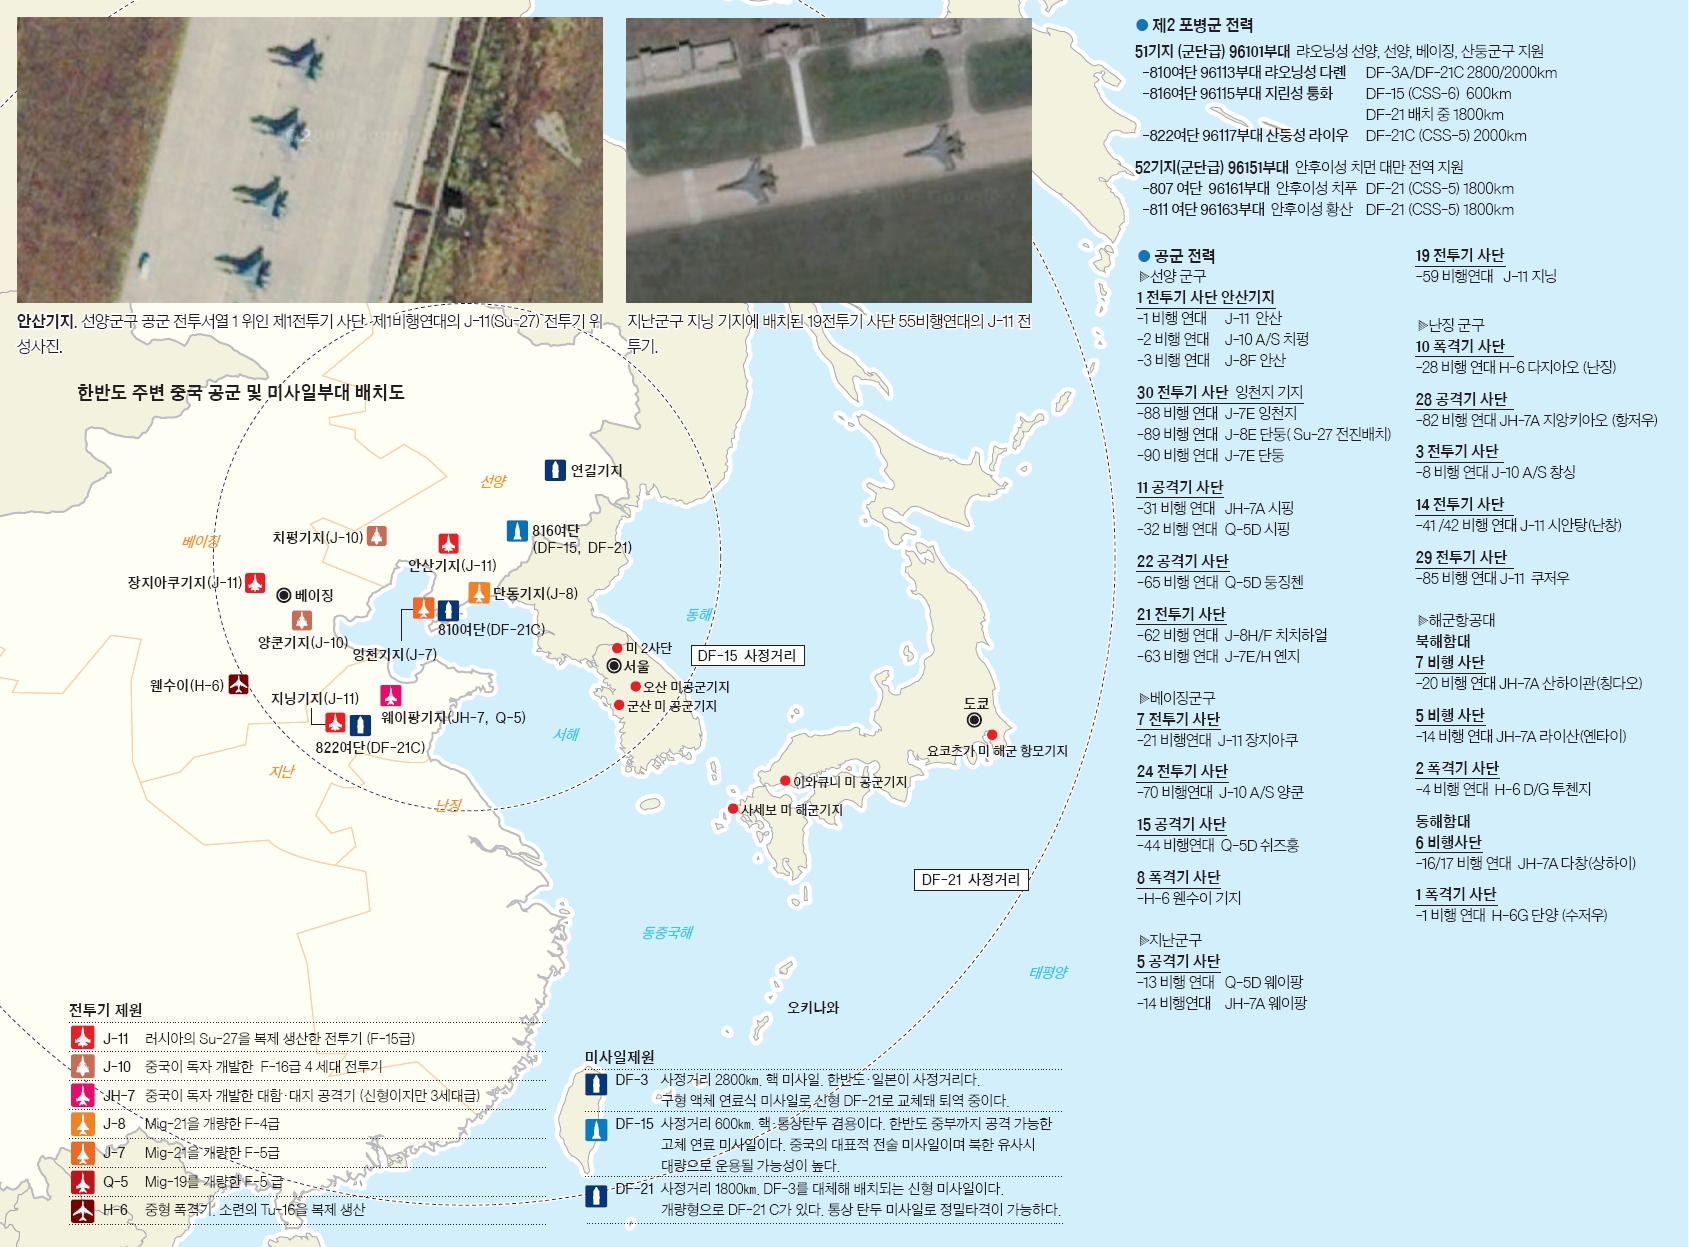 n-e-china-air-force-bases-missile-bases.jpg